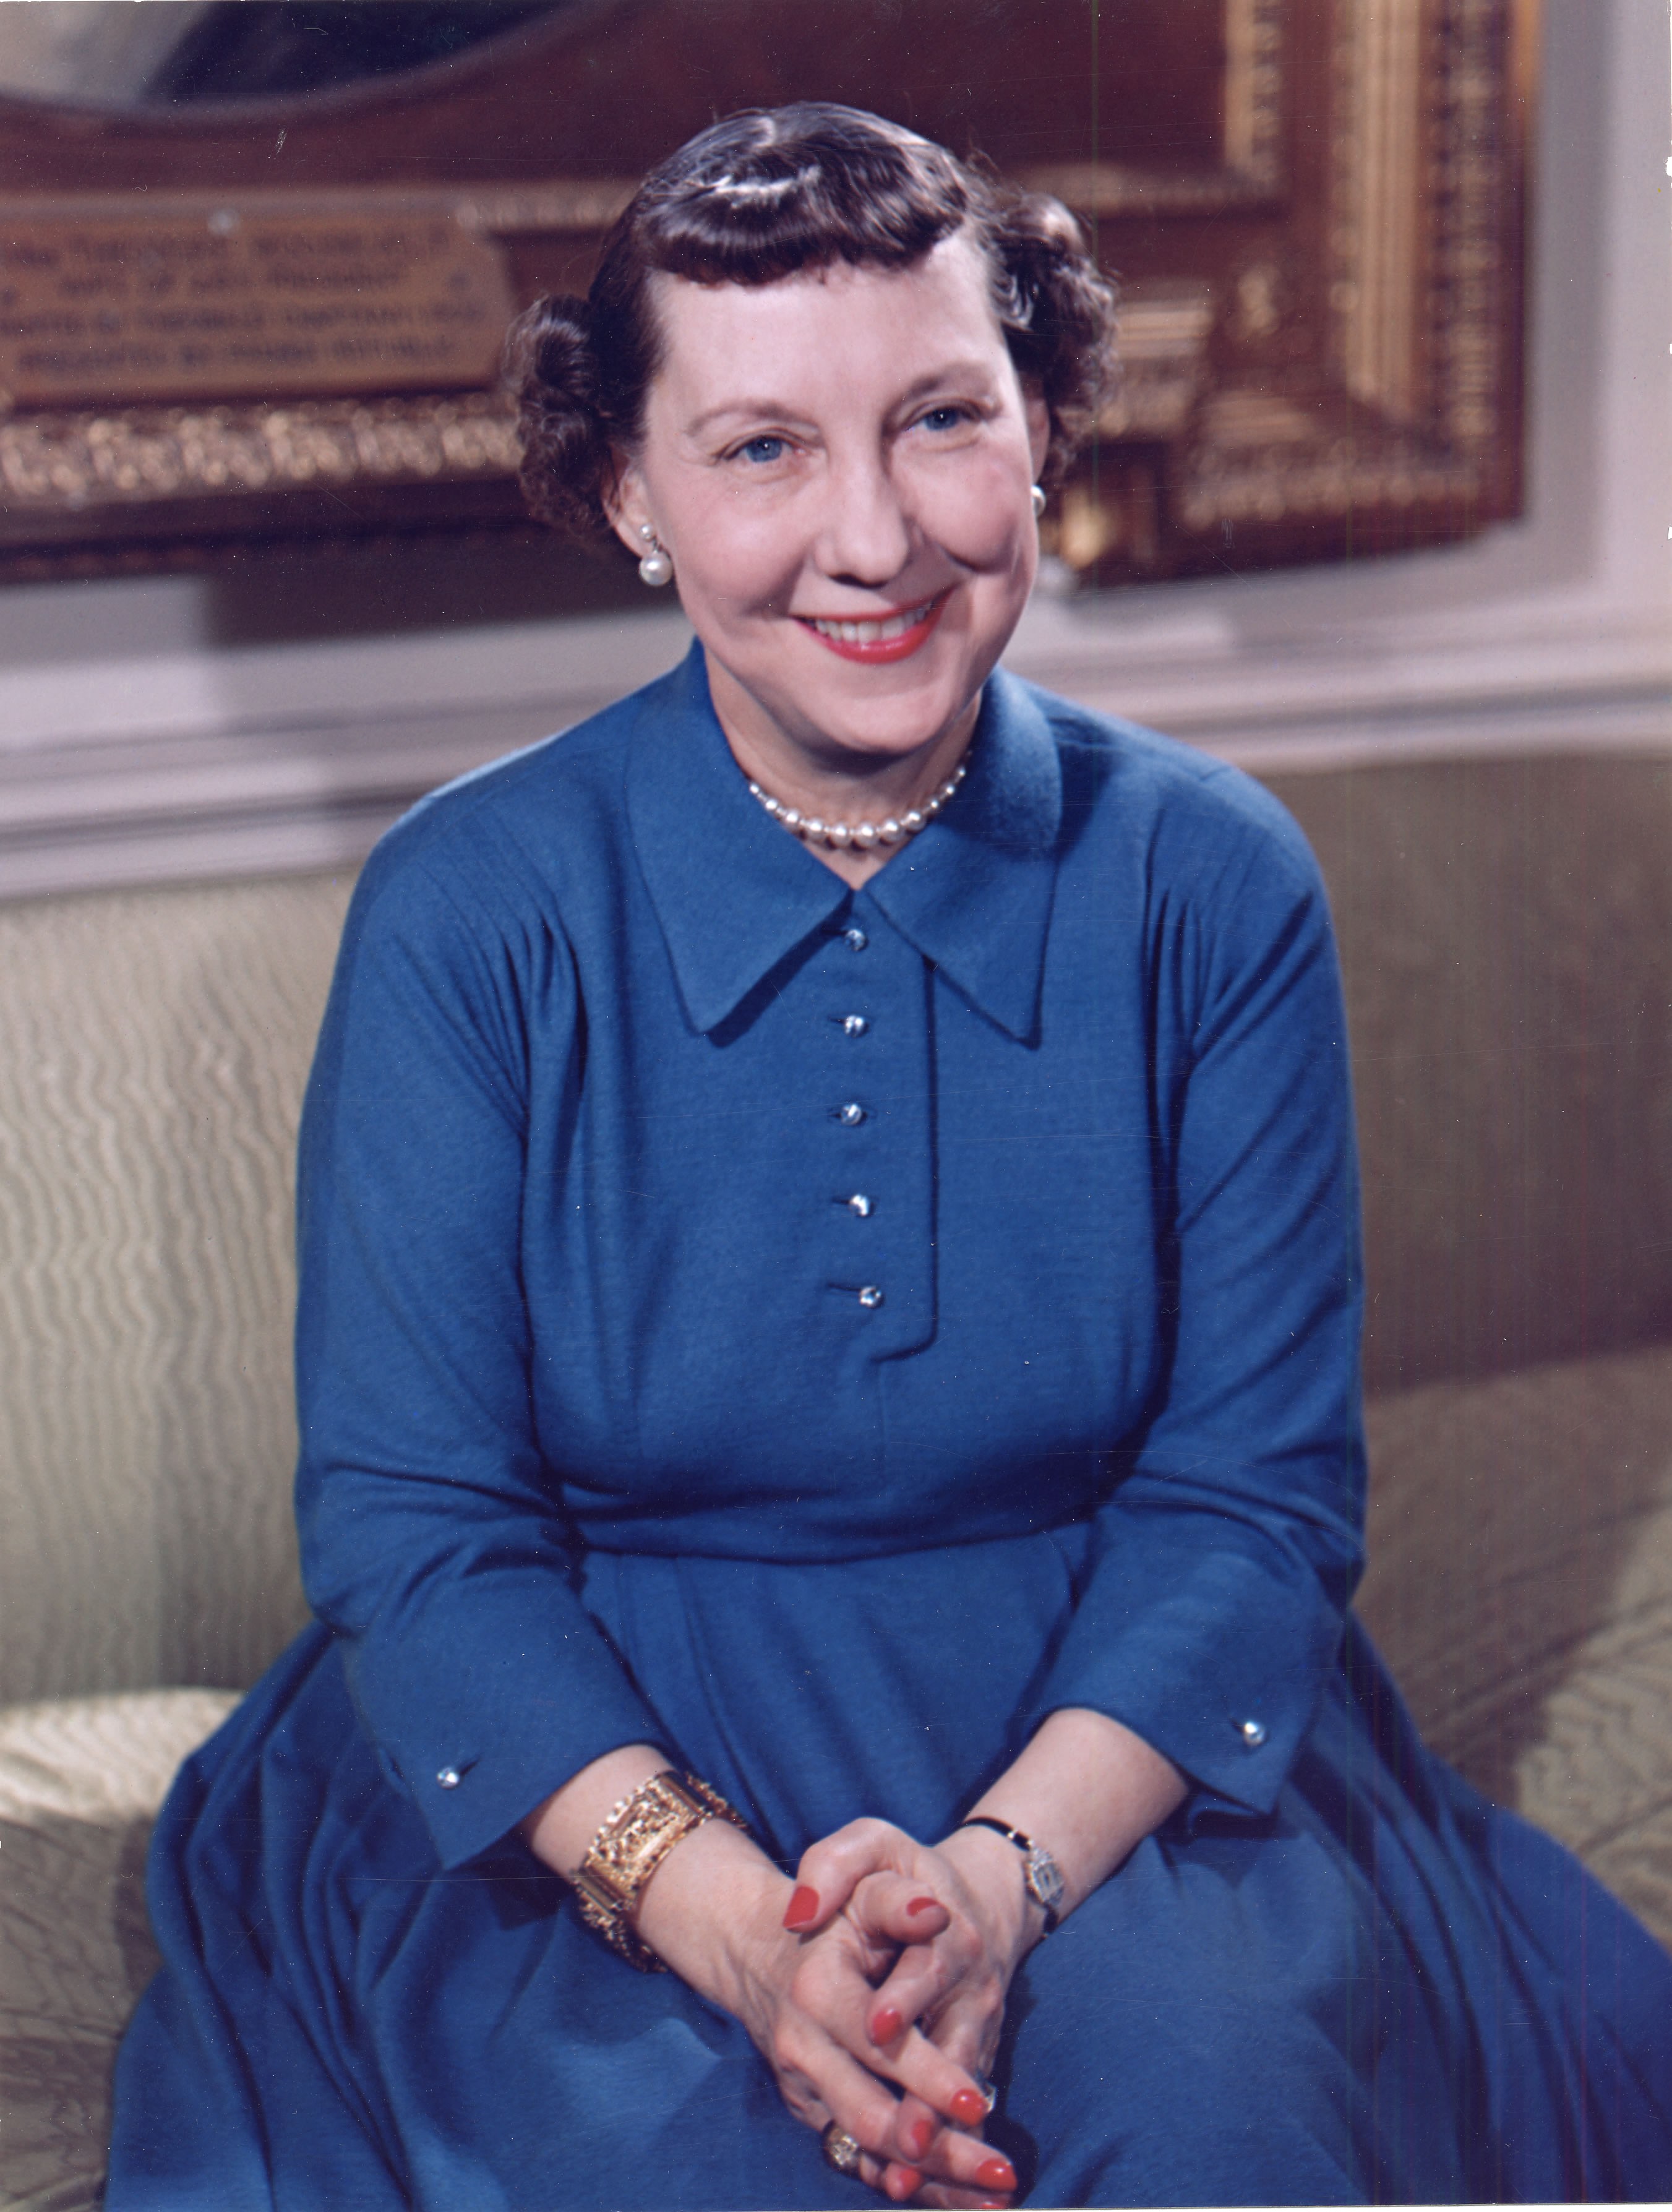 Mamie_Eisenhower_color_photo_portrait,_White_House,_May_1954.jpg